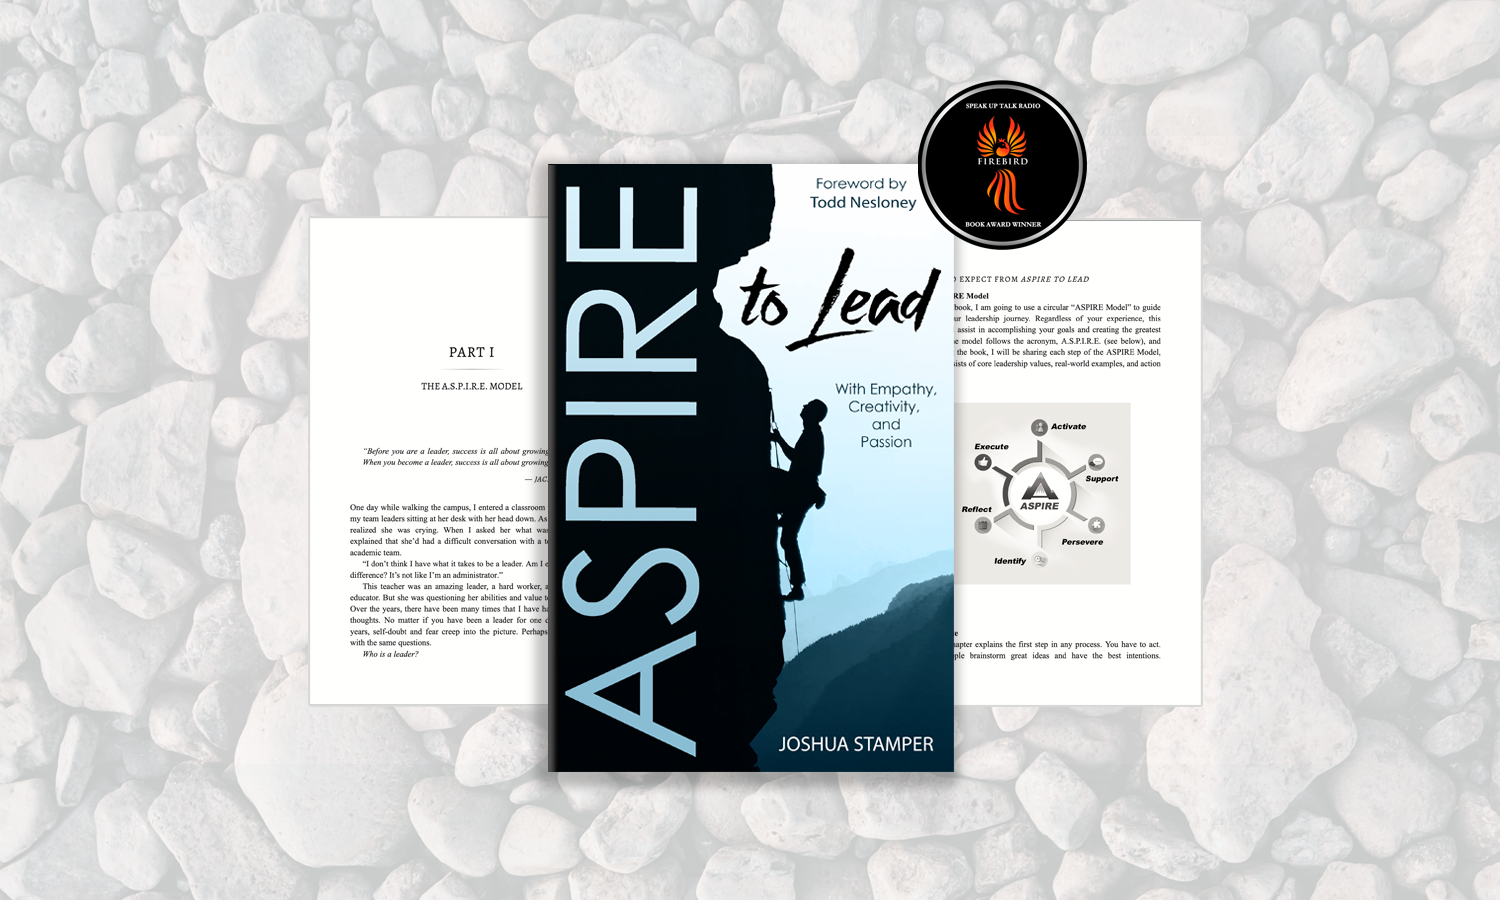 Aspire to Lead Book, Joshua Stamper